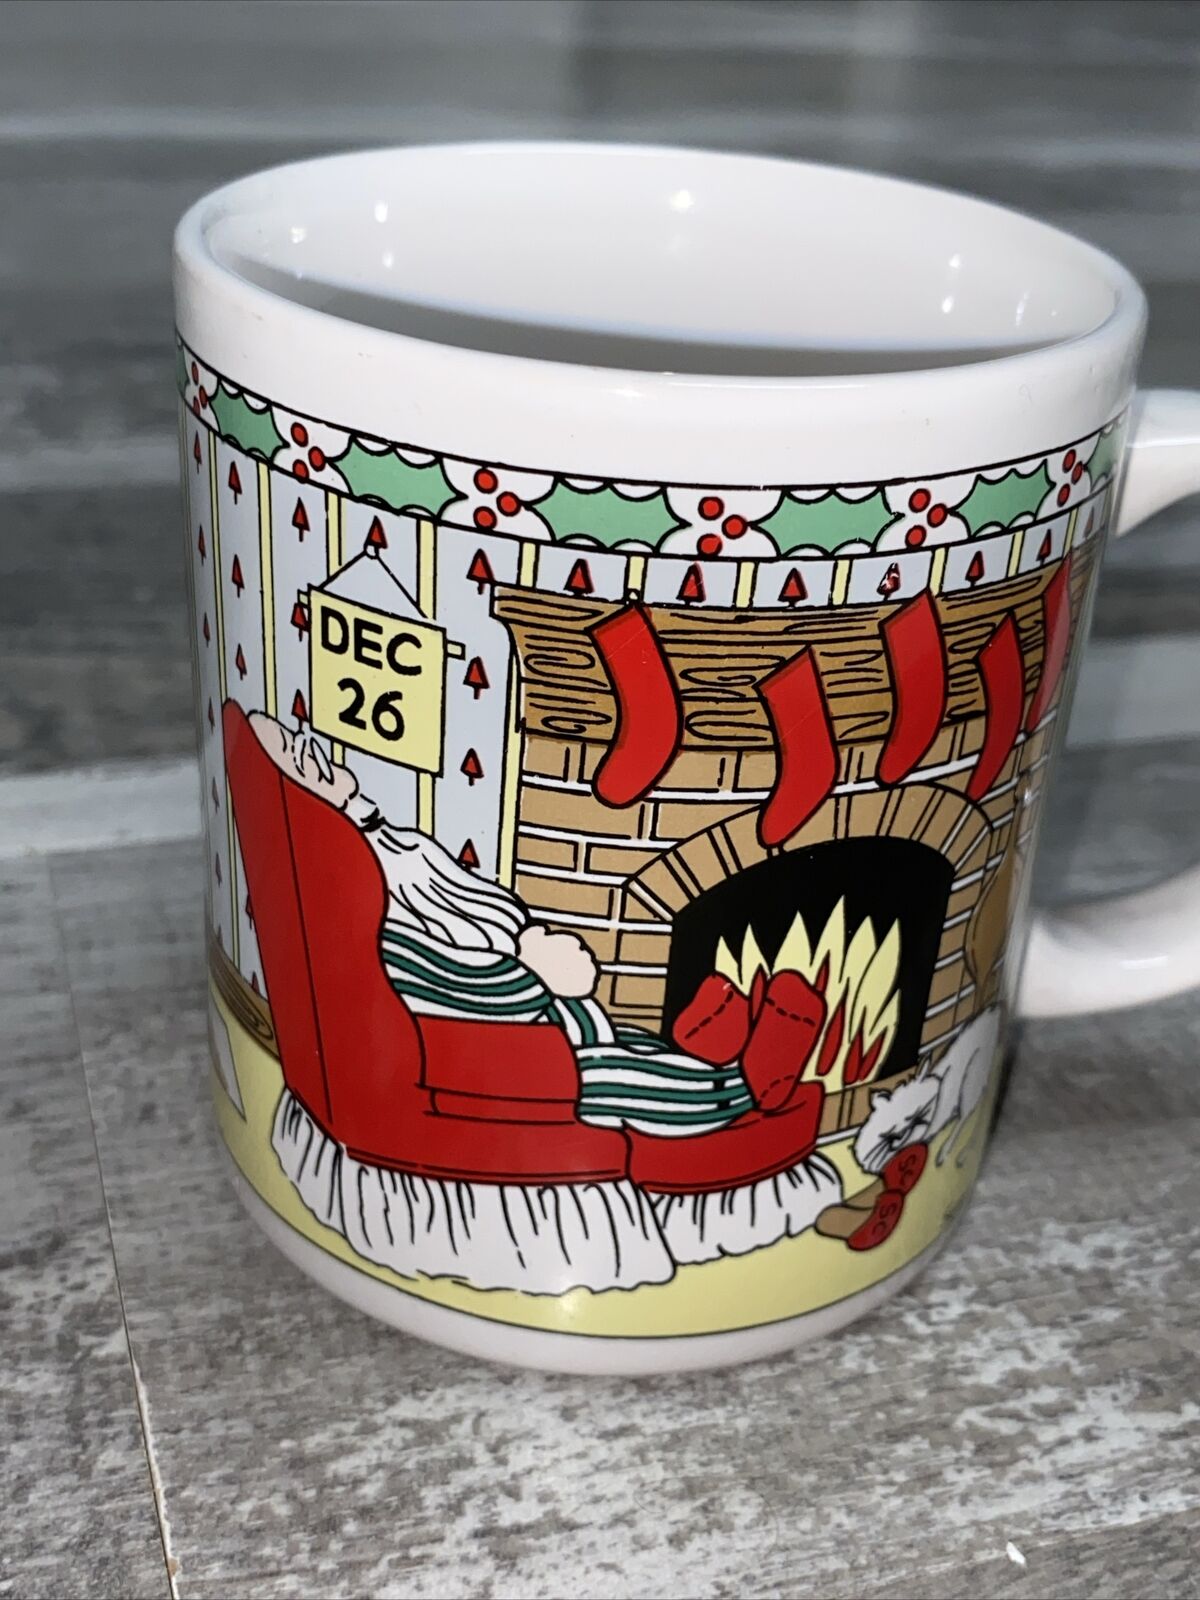 Finest Ceramics Christmas White Coffee Mug Santa Clause Dec 26th Signed Susan